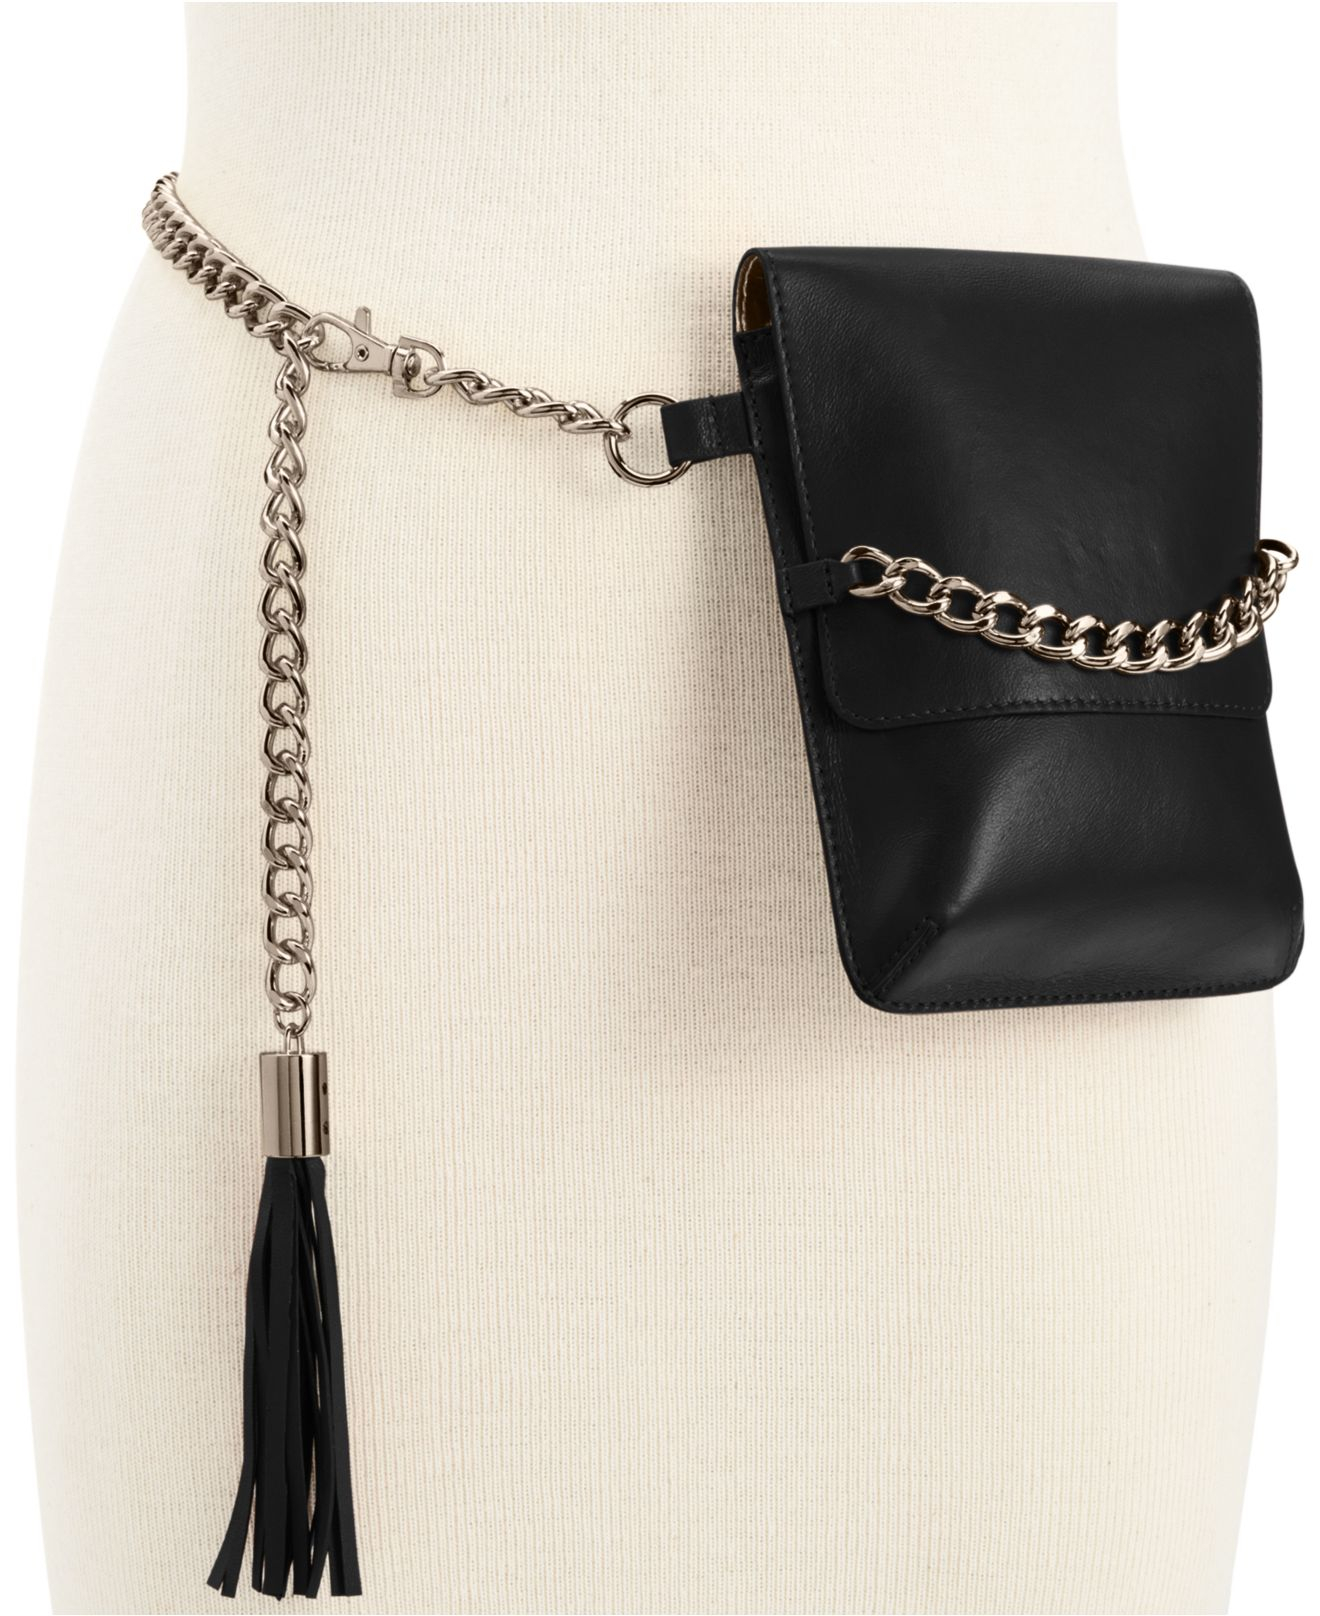 Lyst - Michael Kors Michael Leather Belt Bag With Tassel in Black